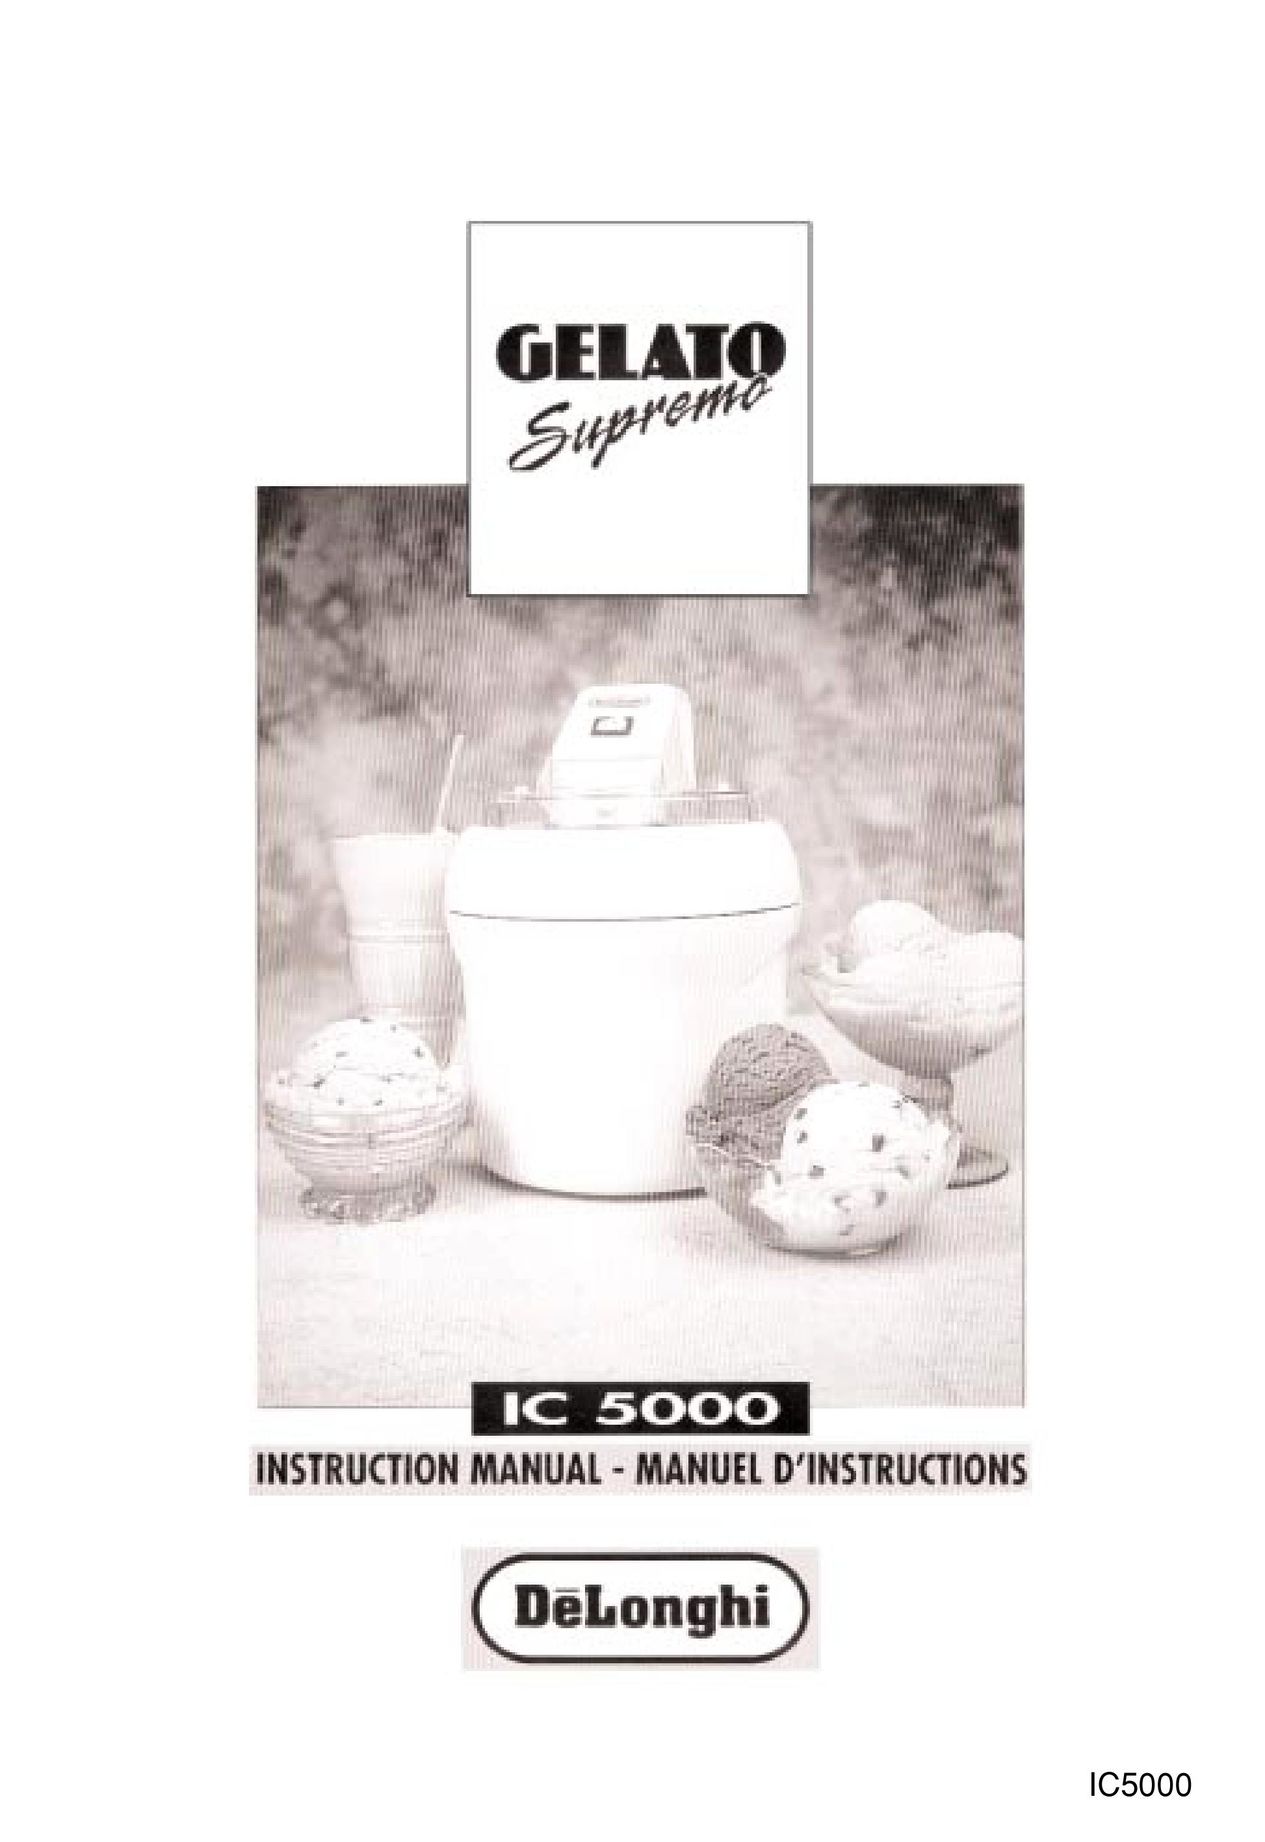 DeLonghi IC 5000 Frozen Dessert Maker User Manual